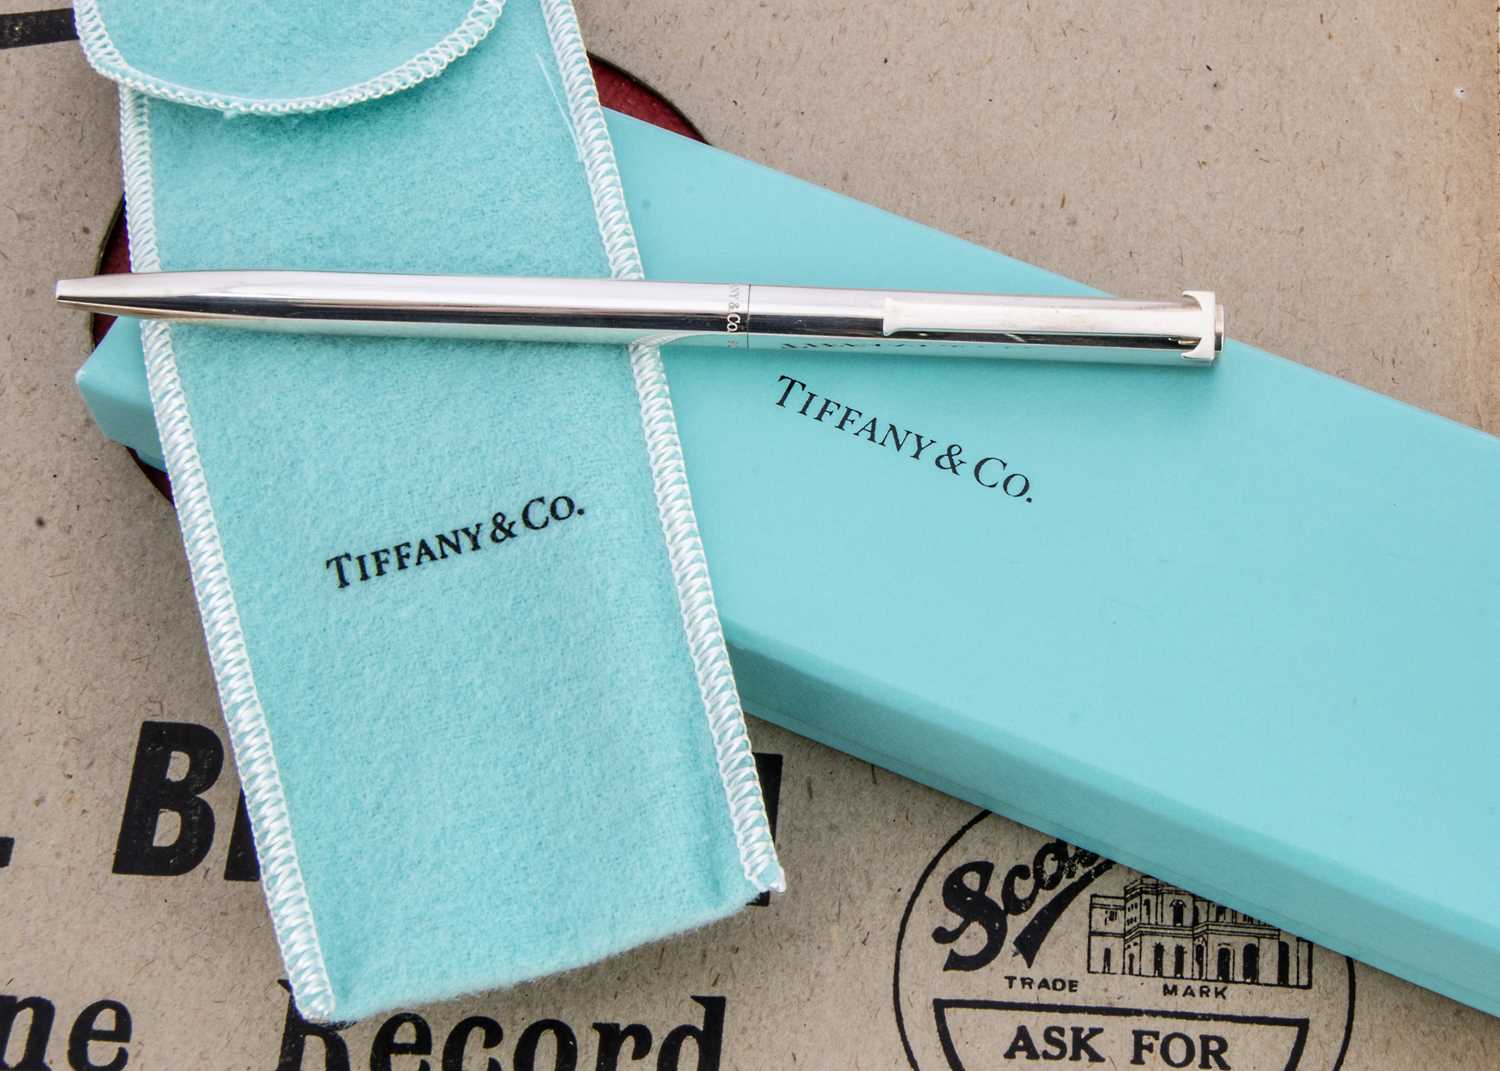 A modern silver biro from Tiffany & Co,